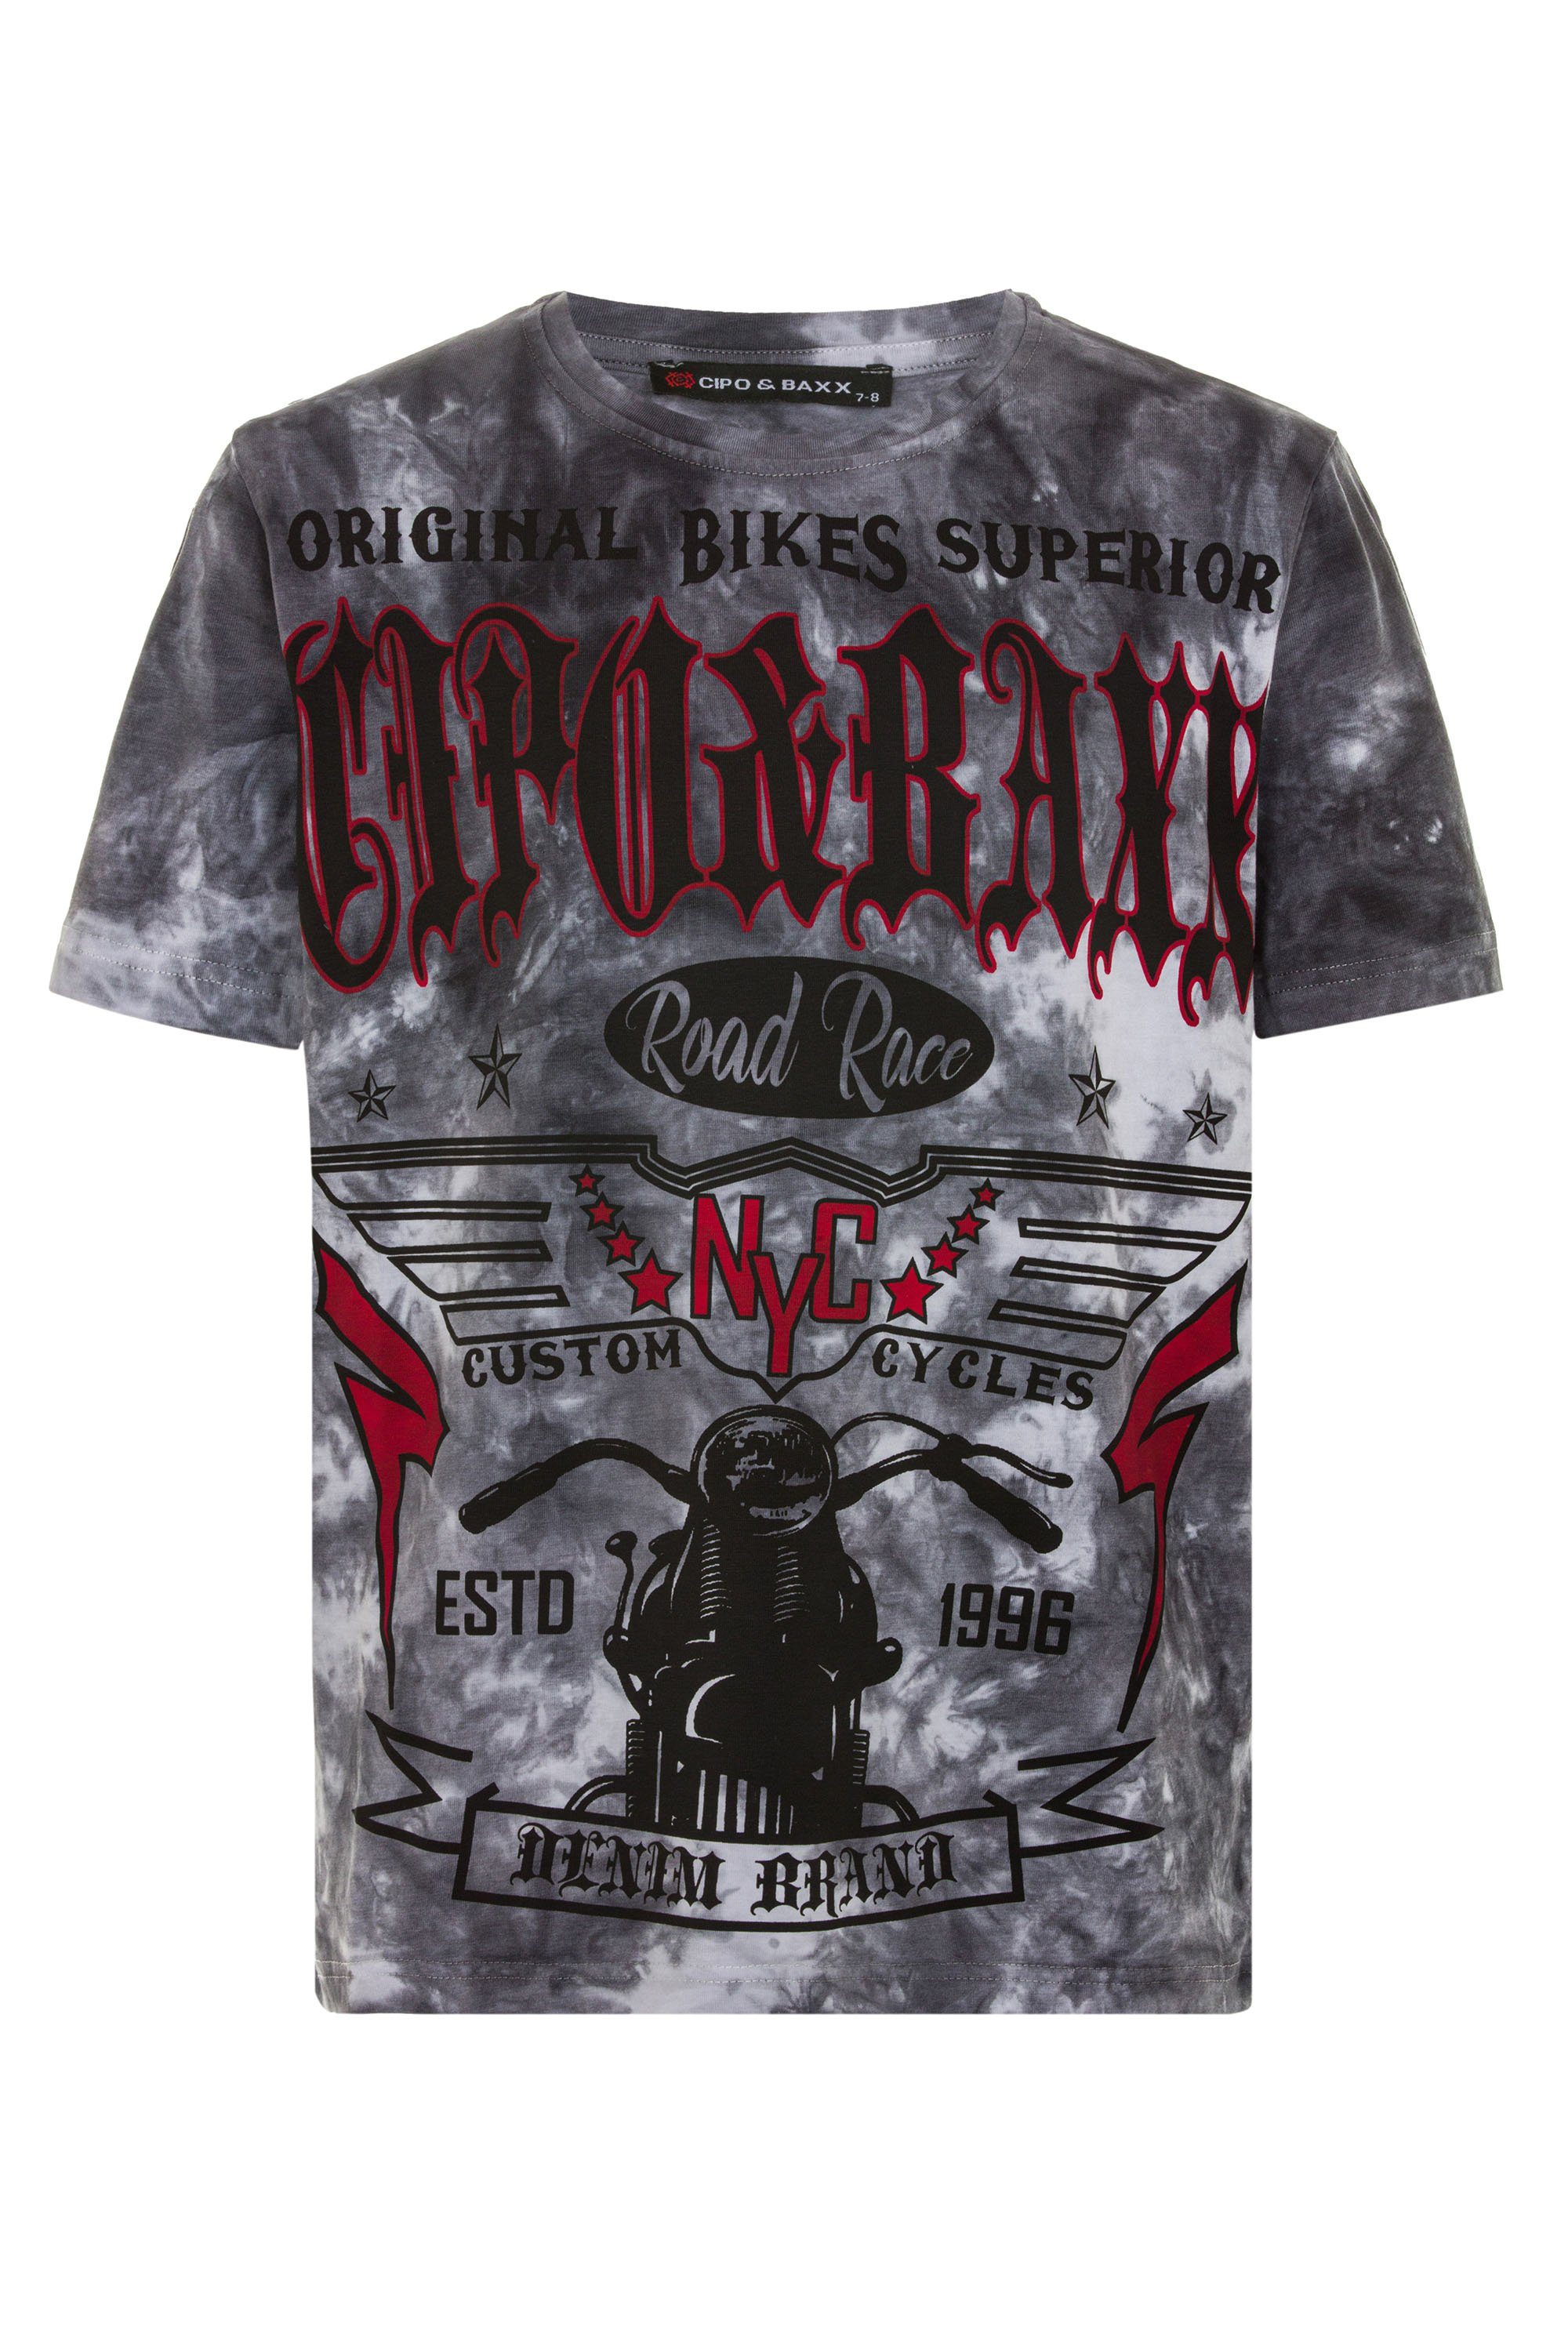 & Motorrad-Print Baxx grau-grau coolem Cipo mit T-Shirt